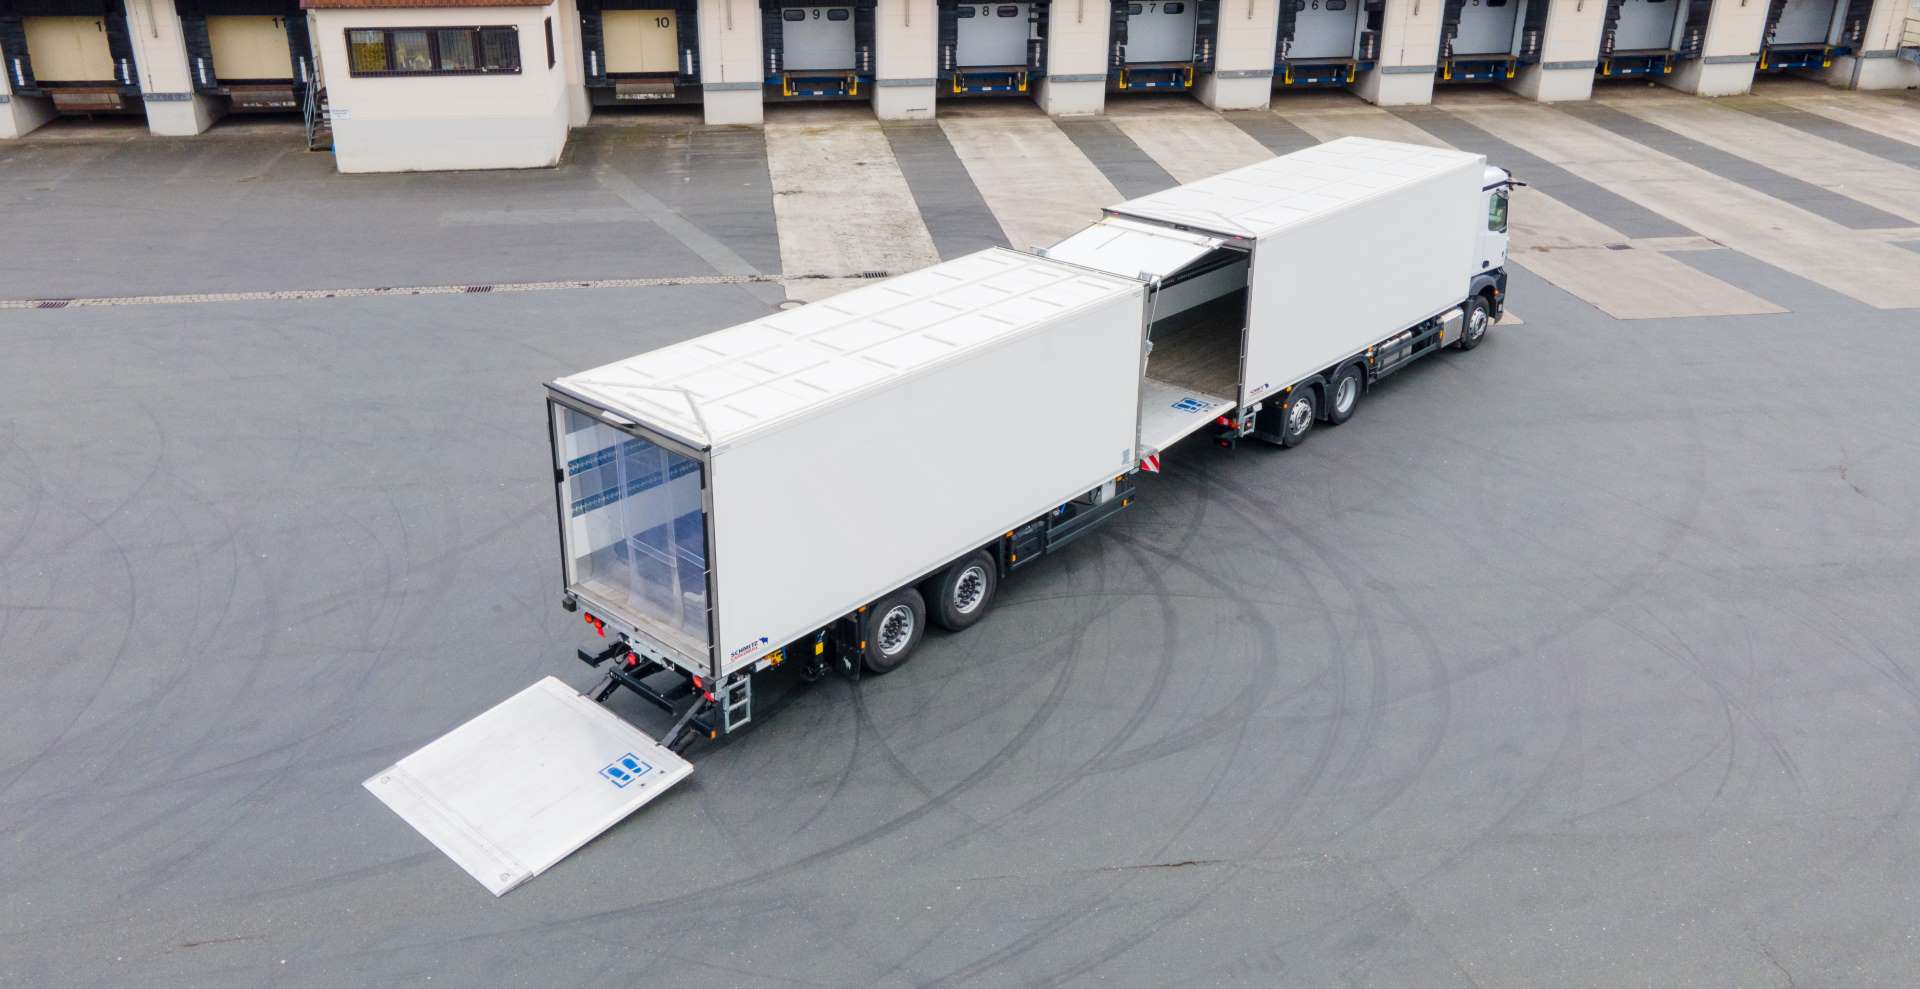 Organise efficient bulk transport with the M.KO Z.KO through-loading trailer